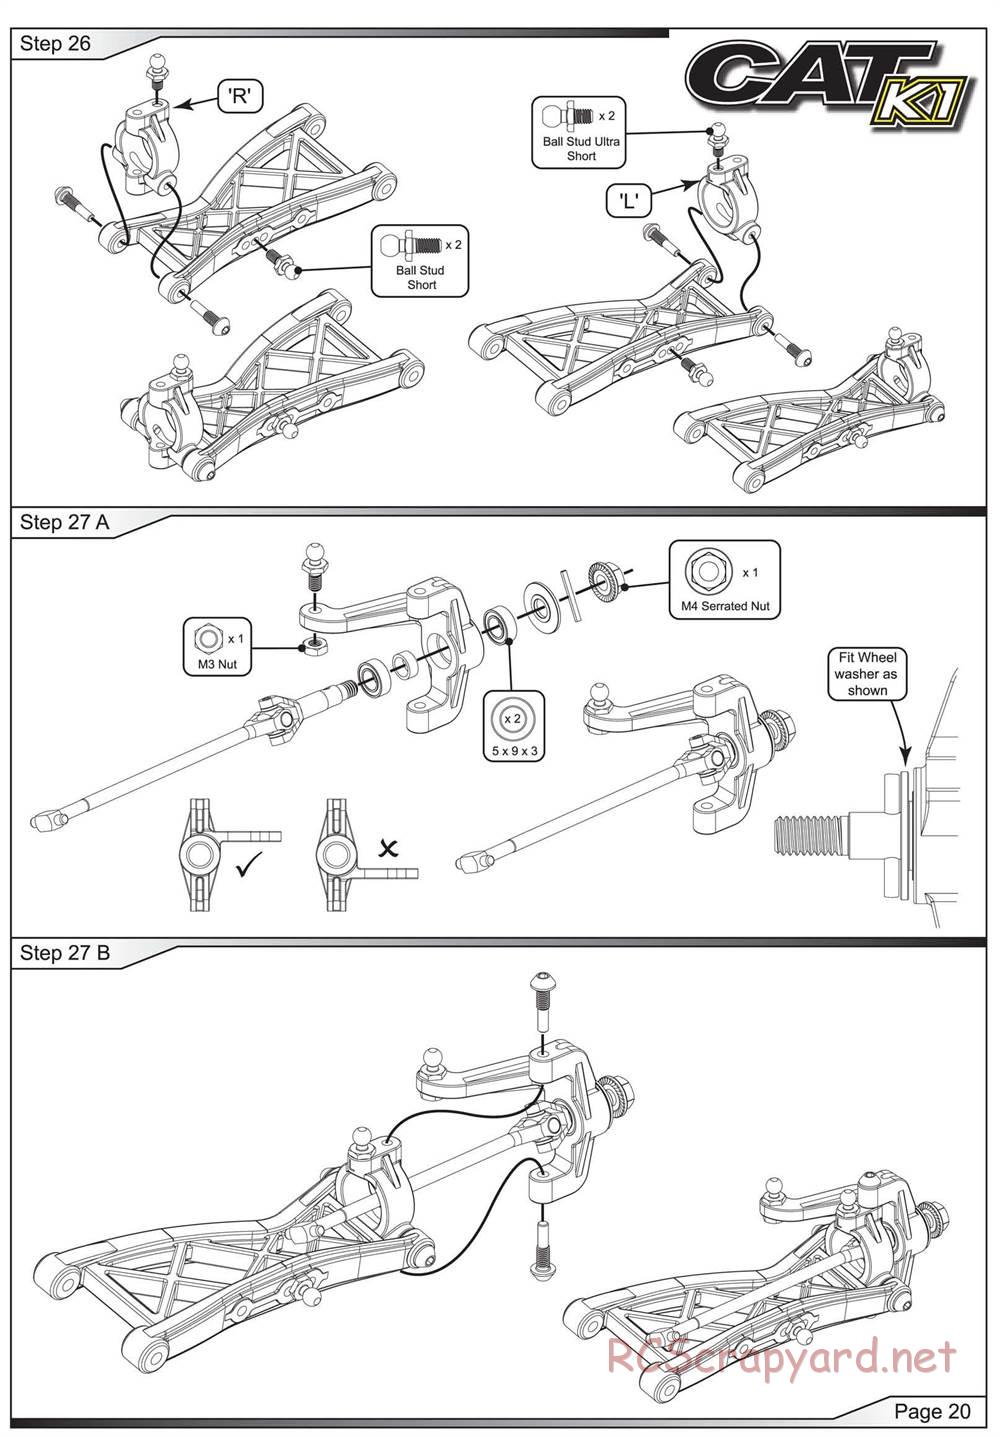 Schumacher - Cat K1 - Manual - Page 20